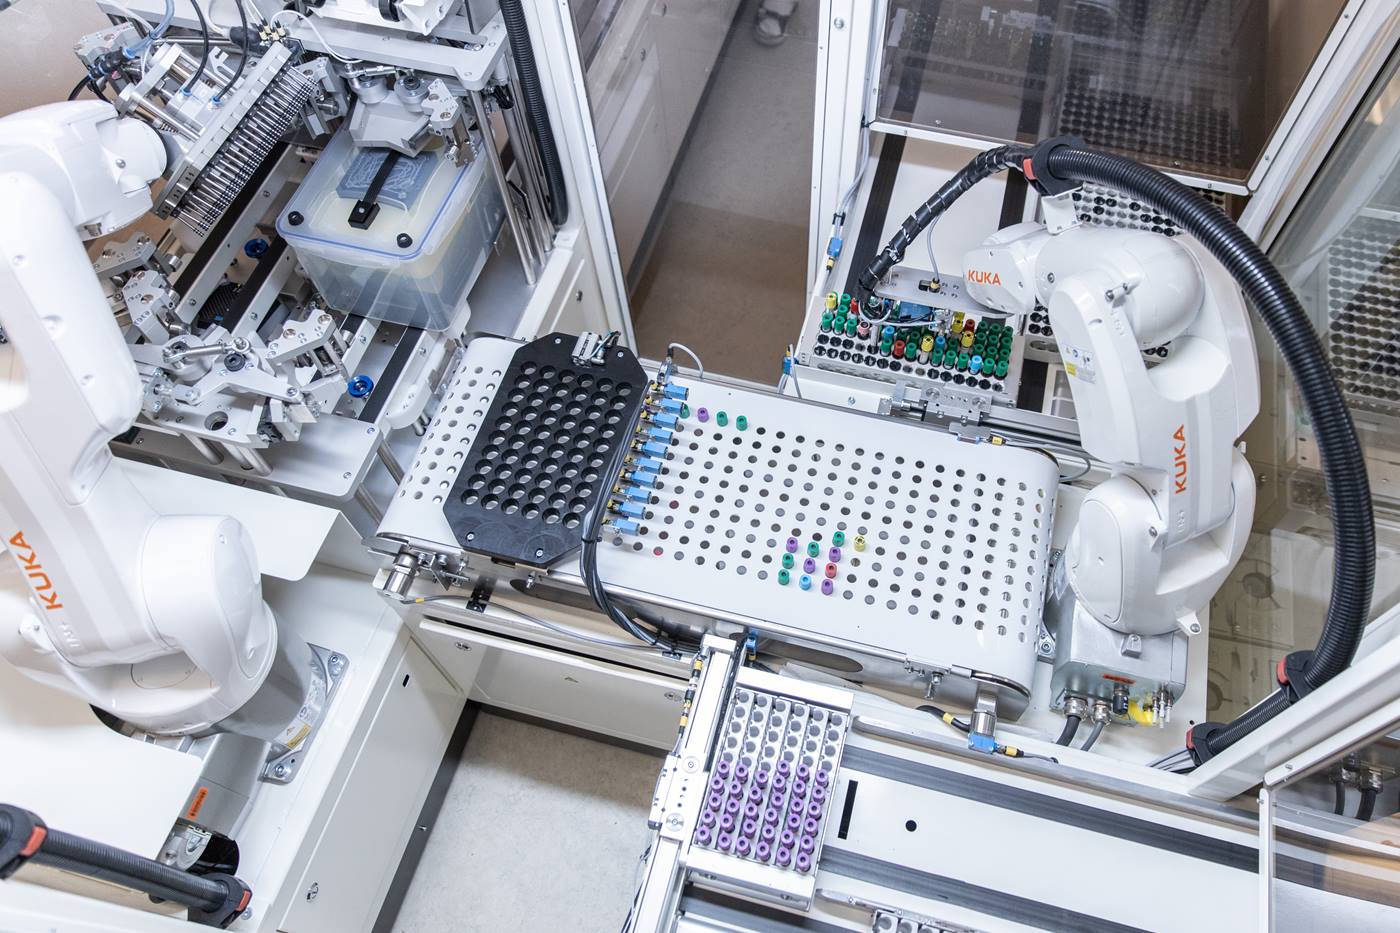 kreativ Start tragt KUKA robots sort up to 3,000 blood samples per day | KUKA AG